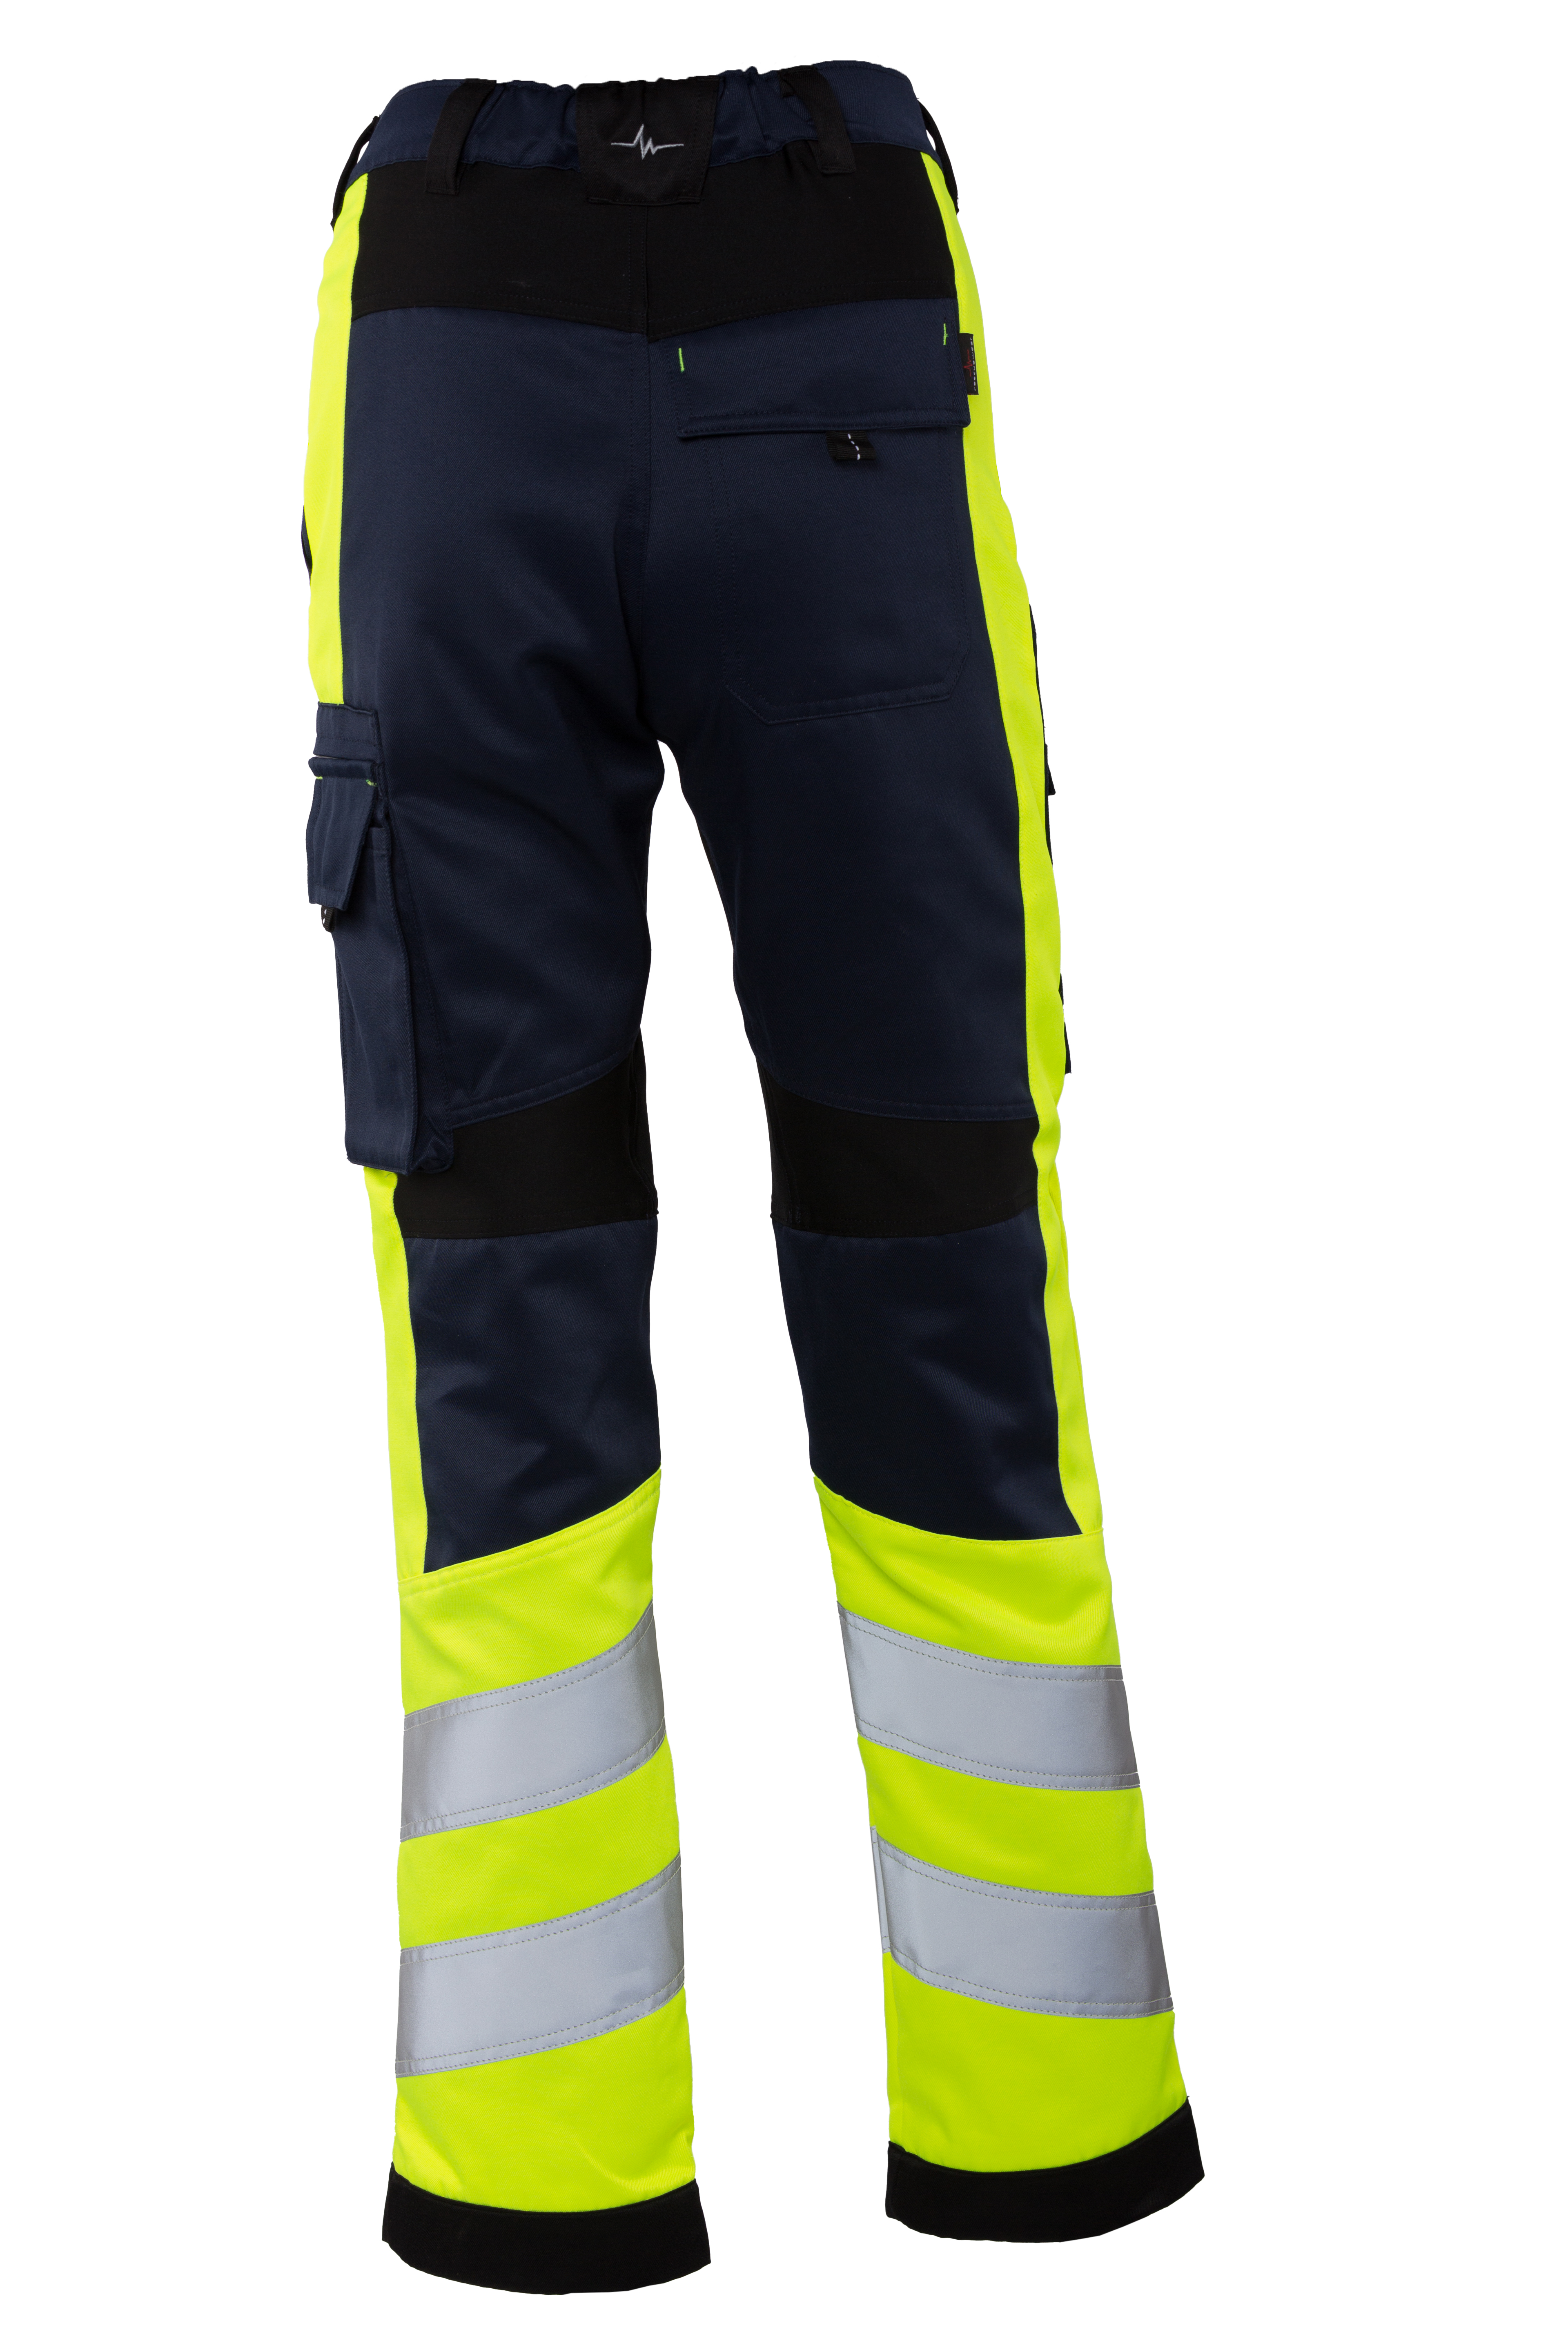 Rescuewear Damen Hose Stretch HiVis Klasse 1 Marineblau / Schwarz / Neon Gelb  - 38